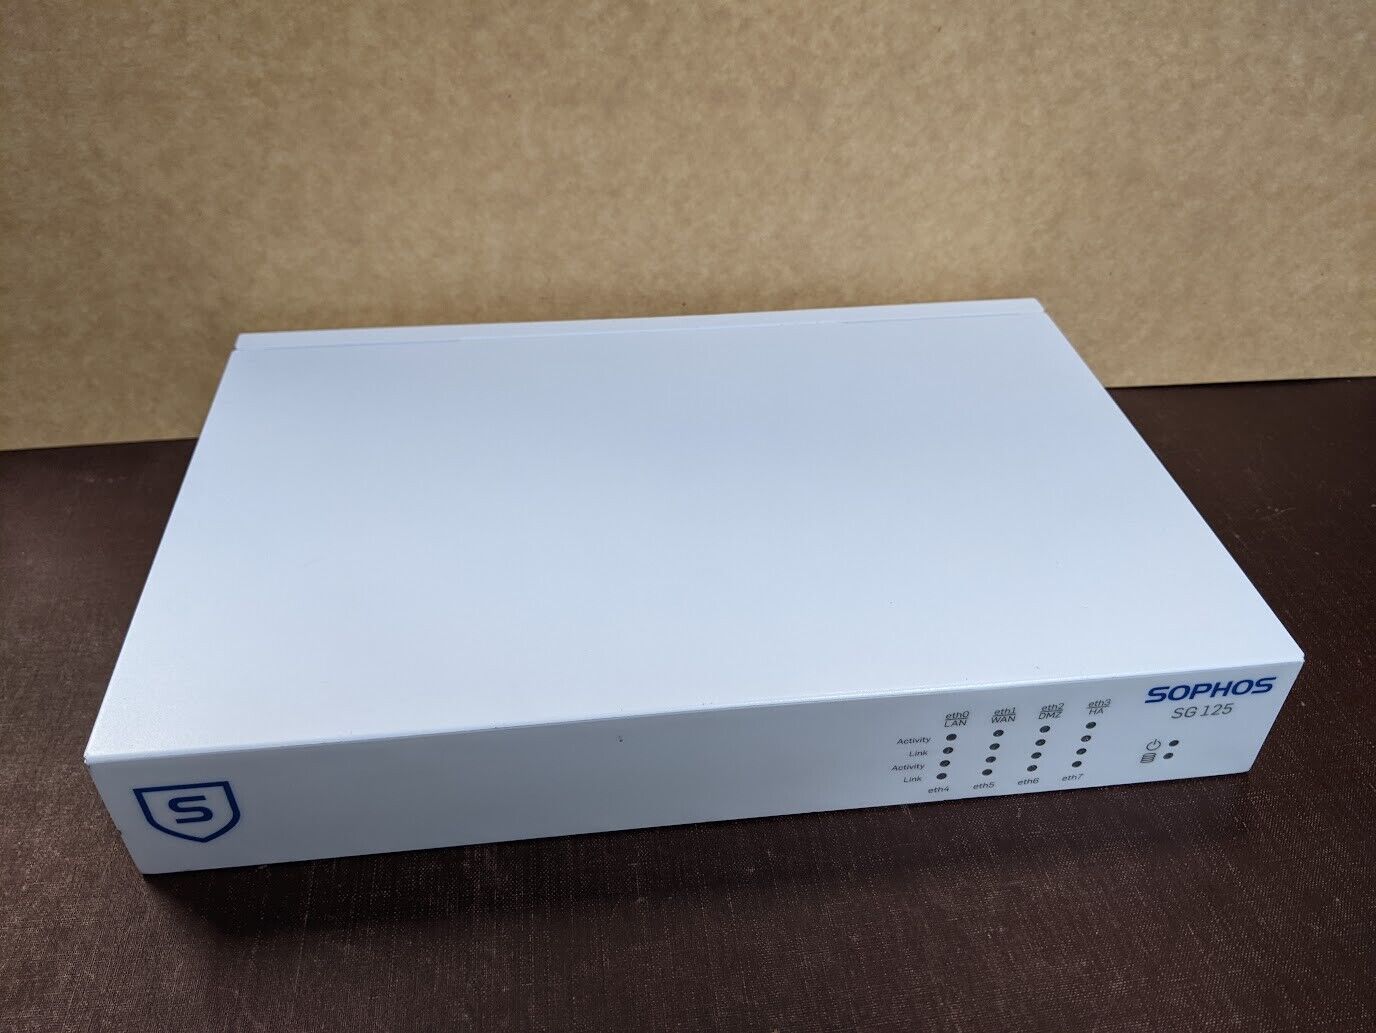 pfSense eight-port Gigabit router/firewall on Sophos SG 125 hardware